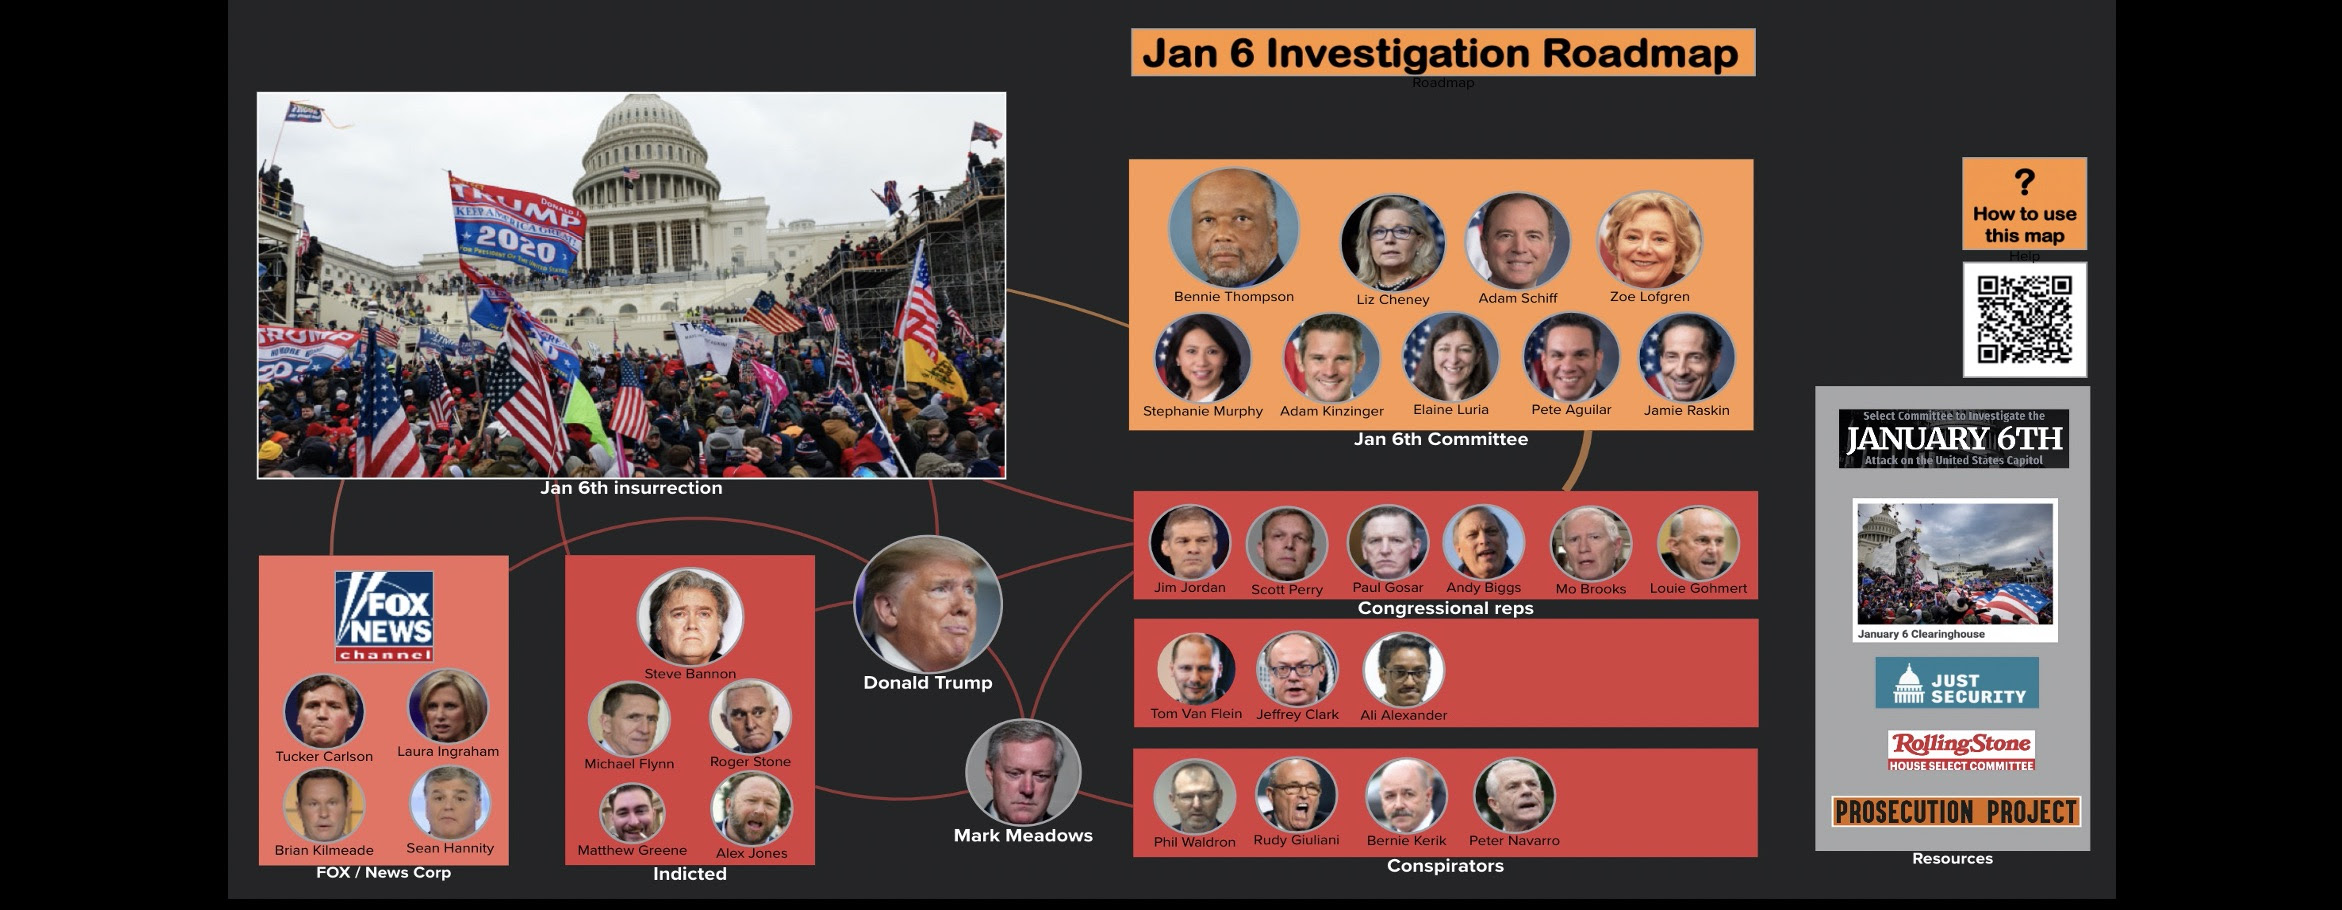 Jan 6 investigation committee roadmap